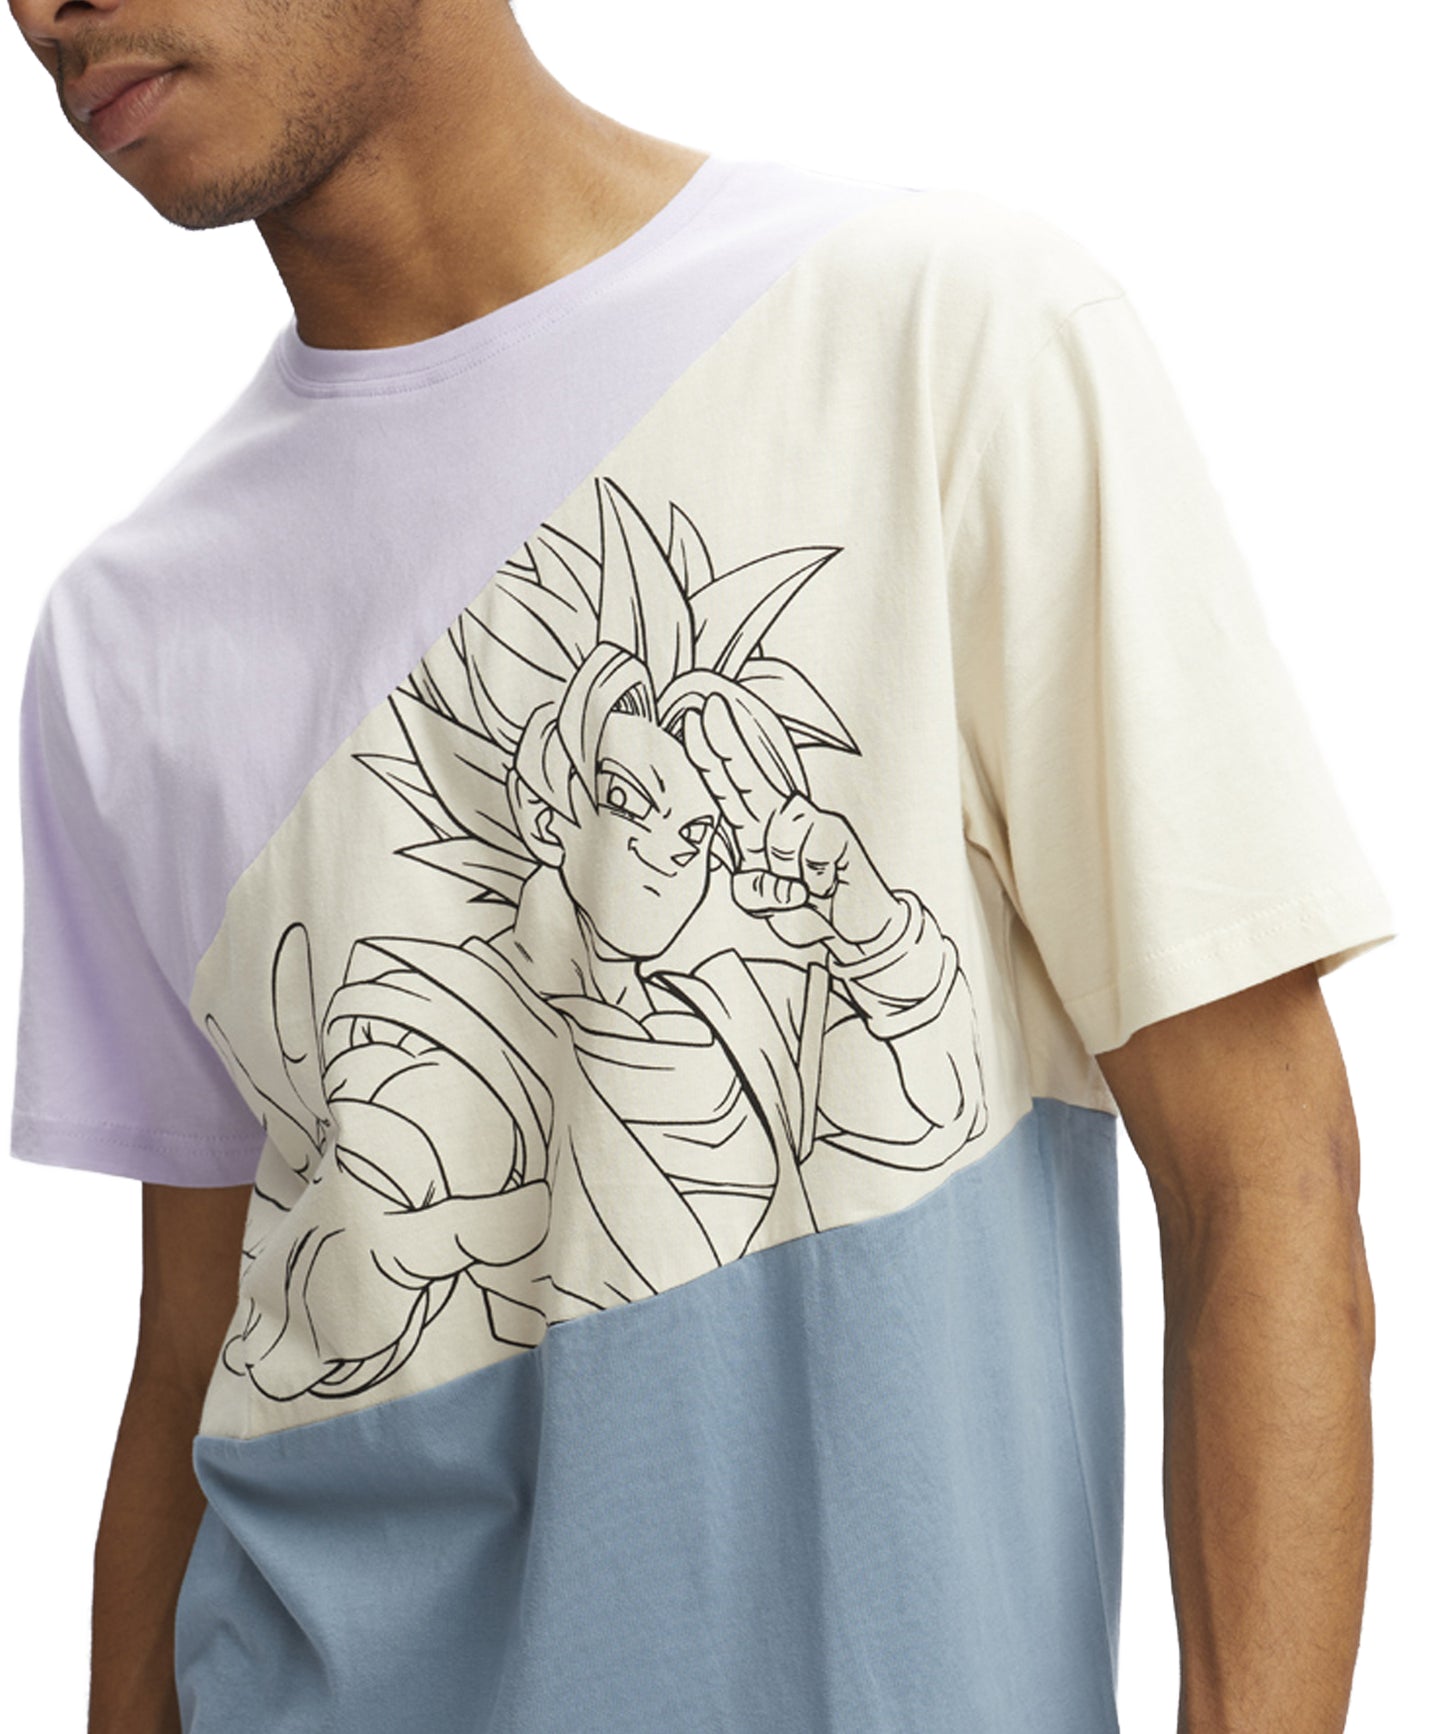 hydroponic-camiseta-dragon-ball-z-line-color-mauve-sand-denim-algodón-100%-manga-corta-serigrafía-dragon-ball-en-el-pecho